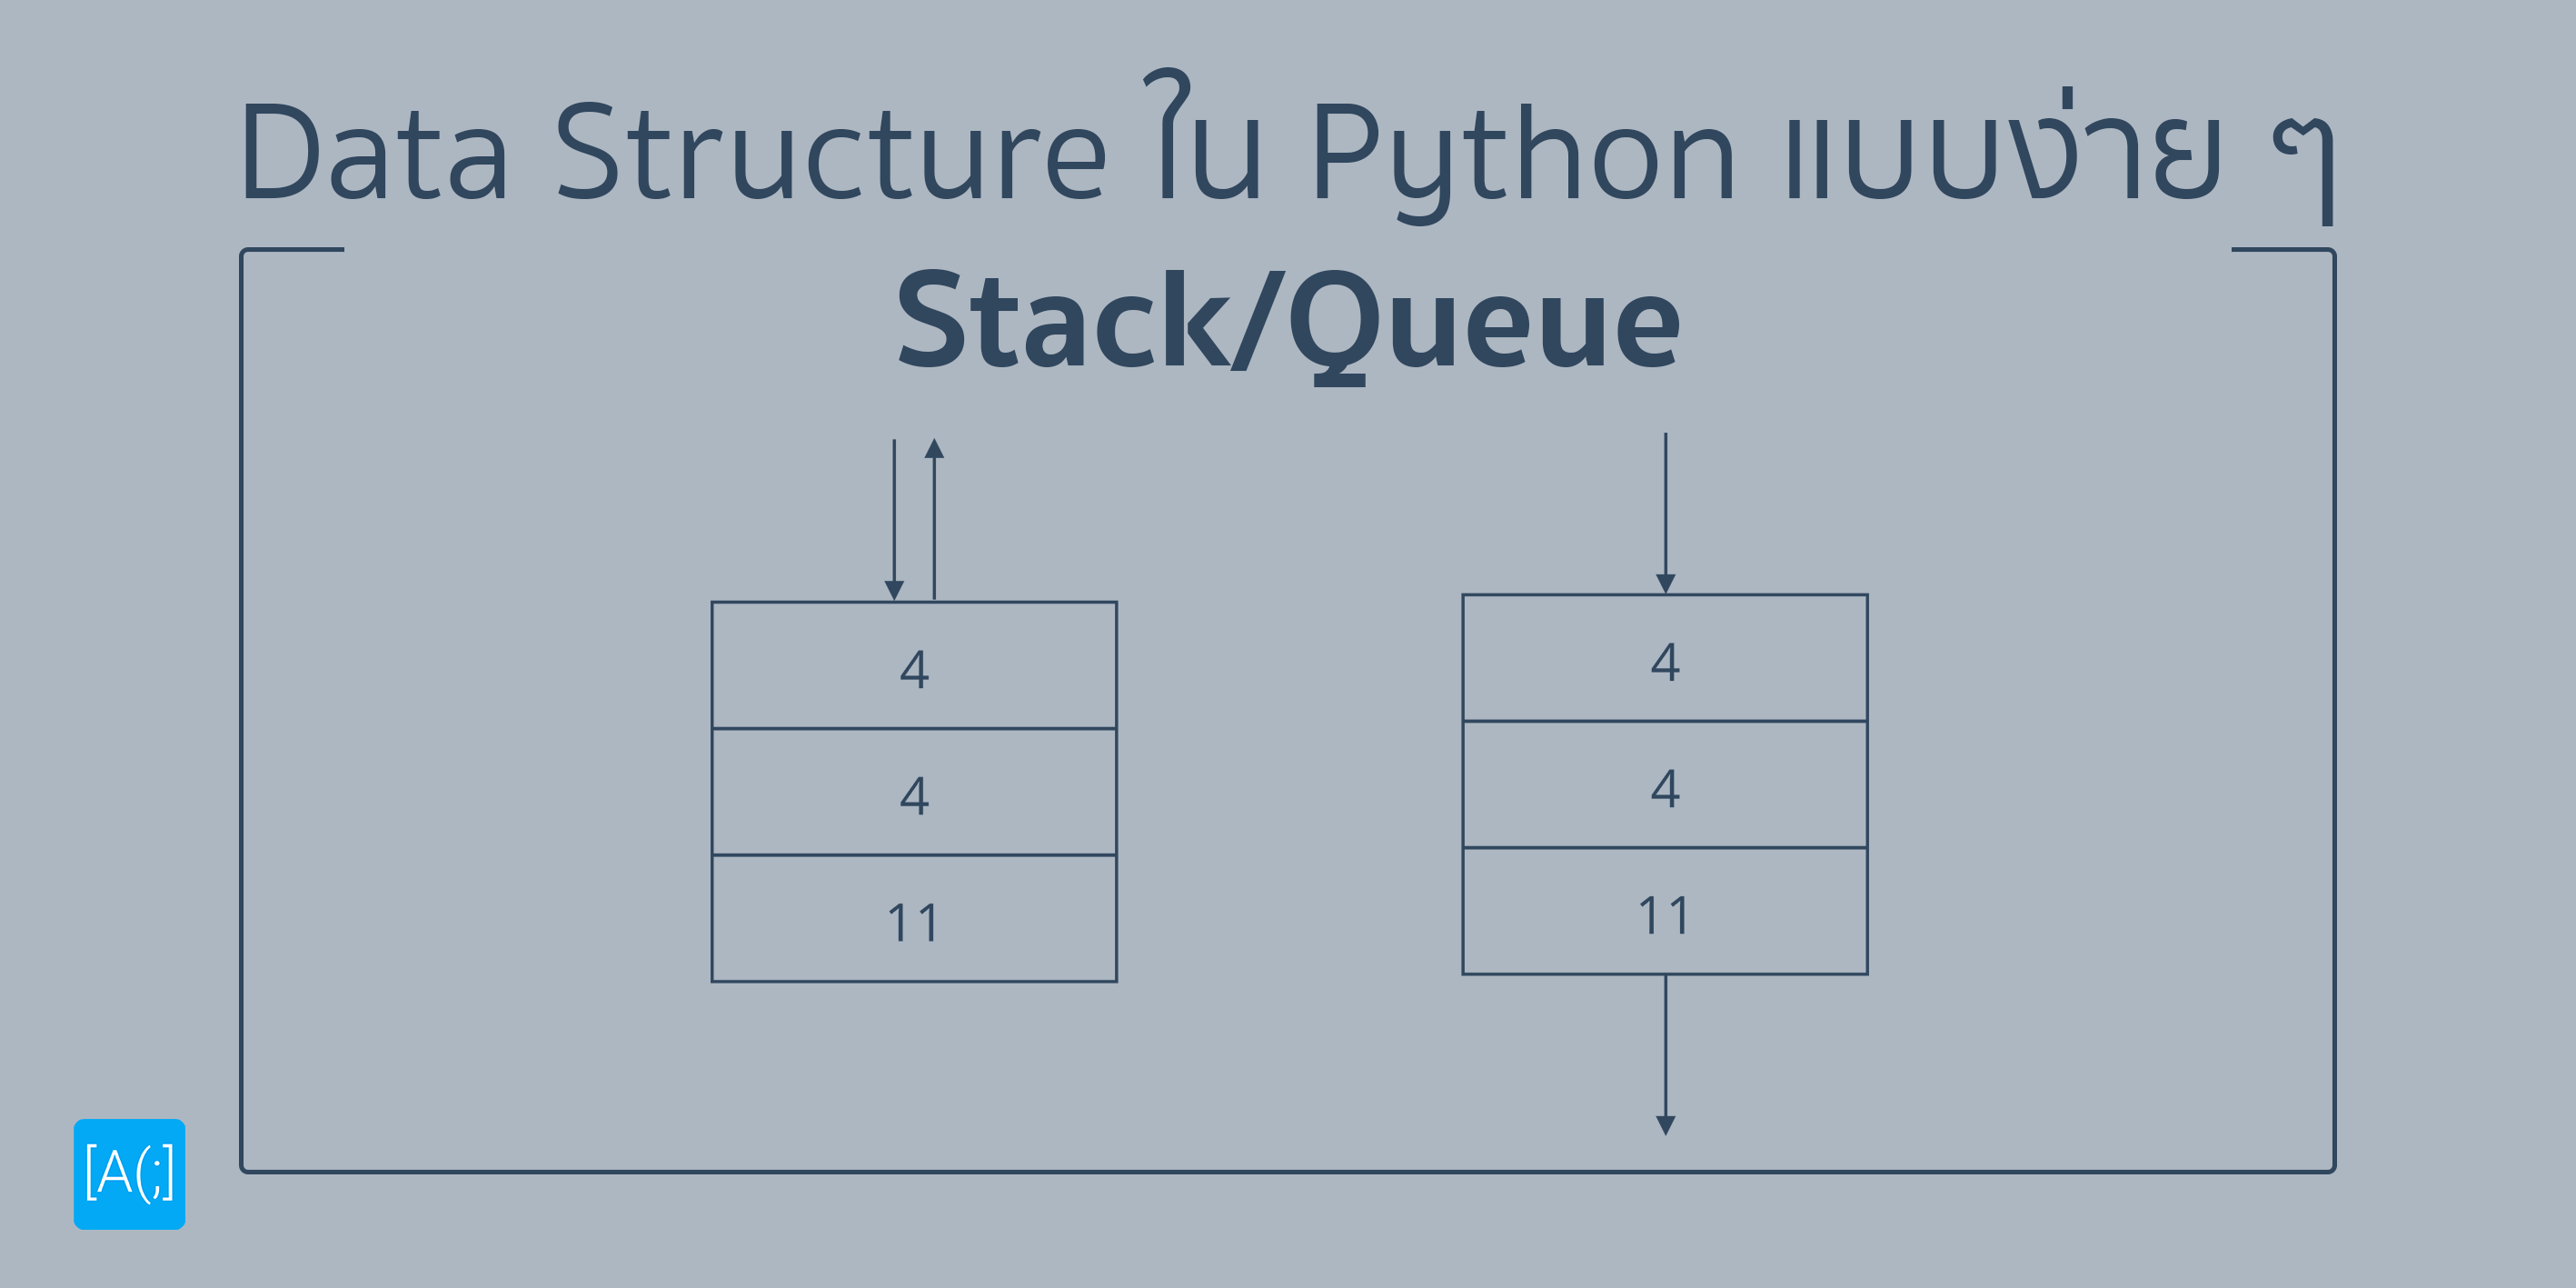 Data Structure ใน Python แบบง่าย ๆ (ตอน Stack/Queue)